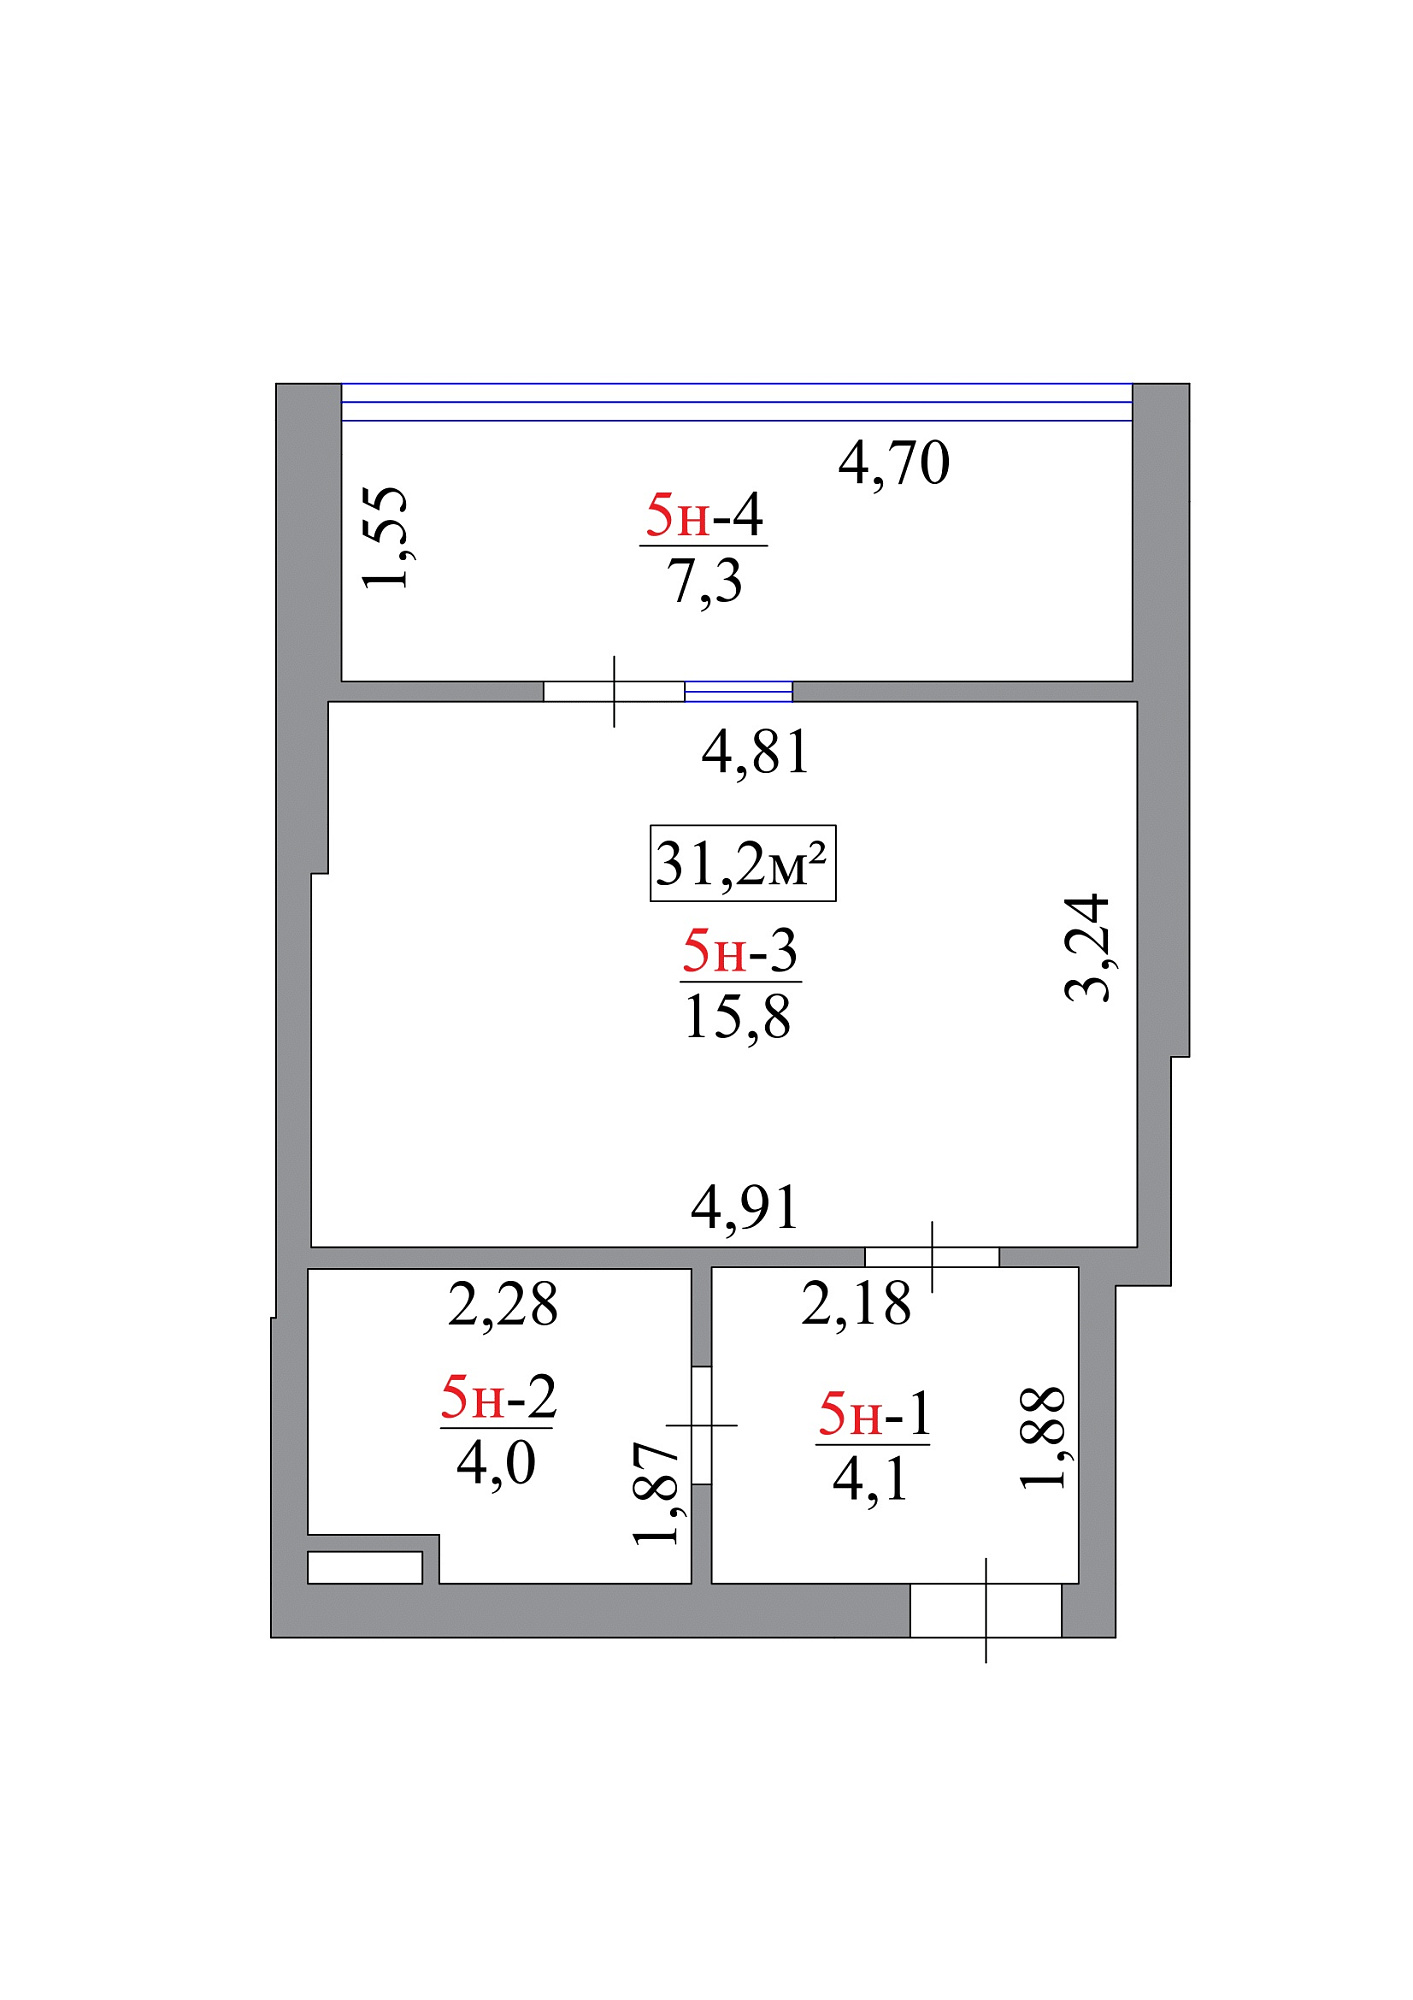 Planning Smart flats area 31.2m2, AB-07-01/00005.